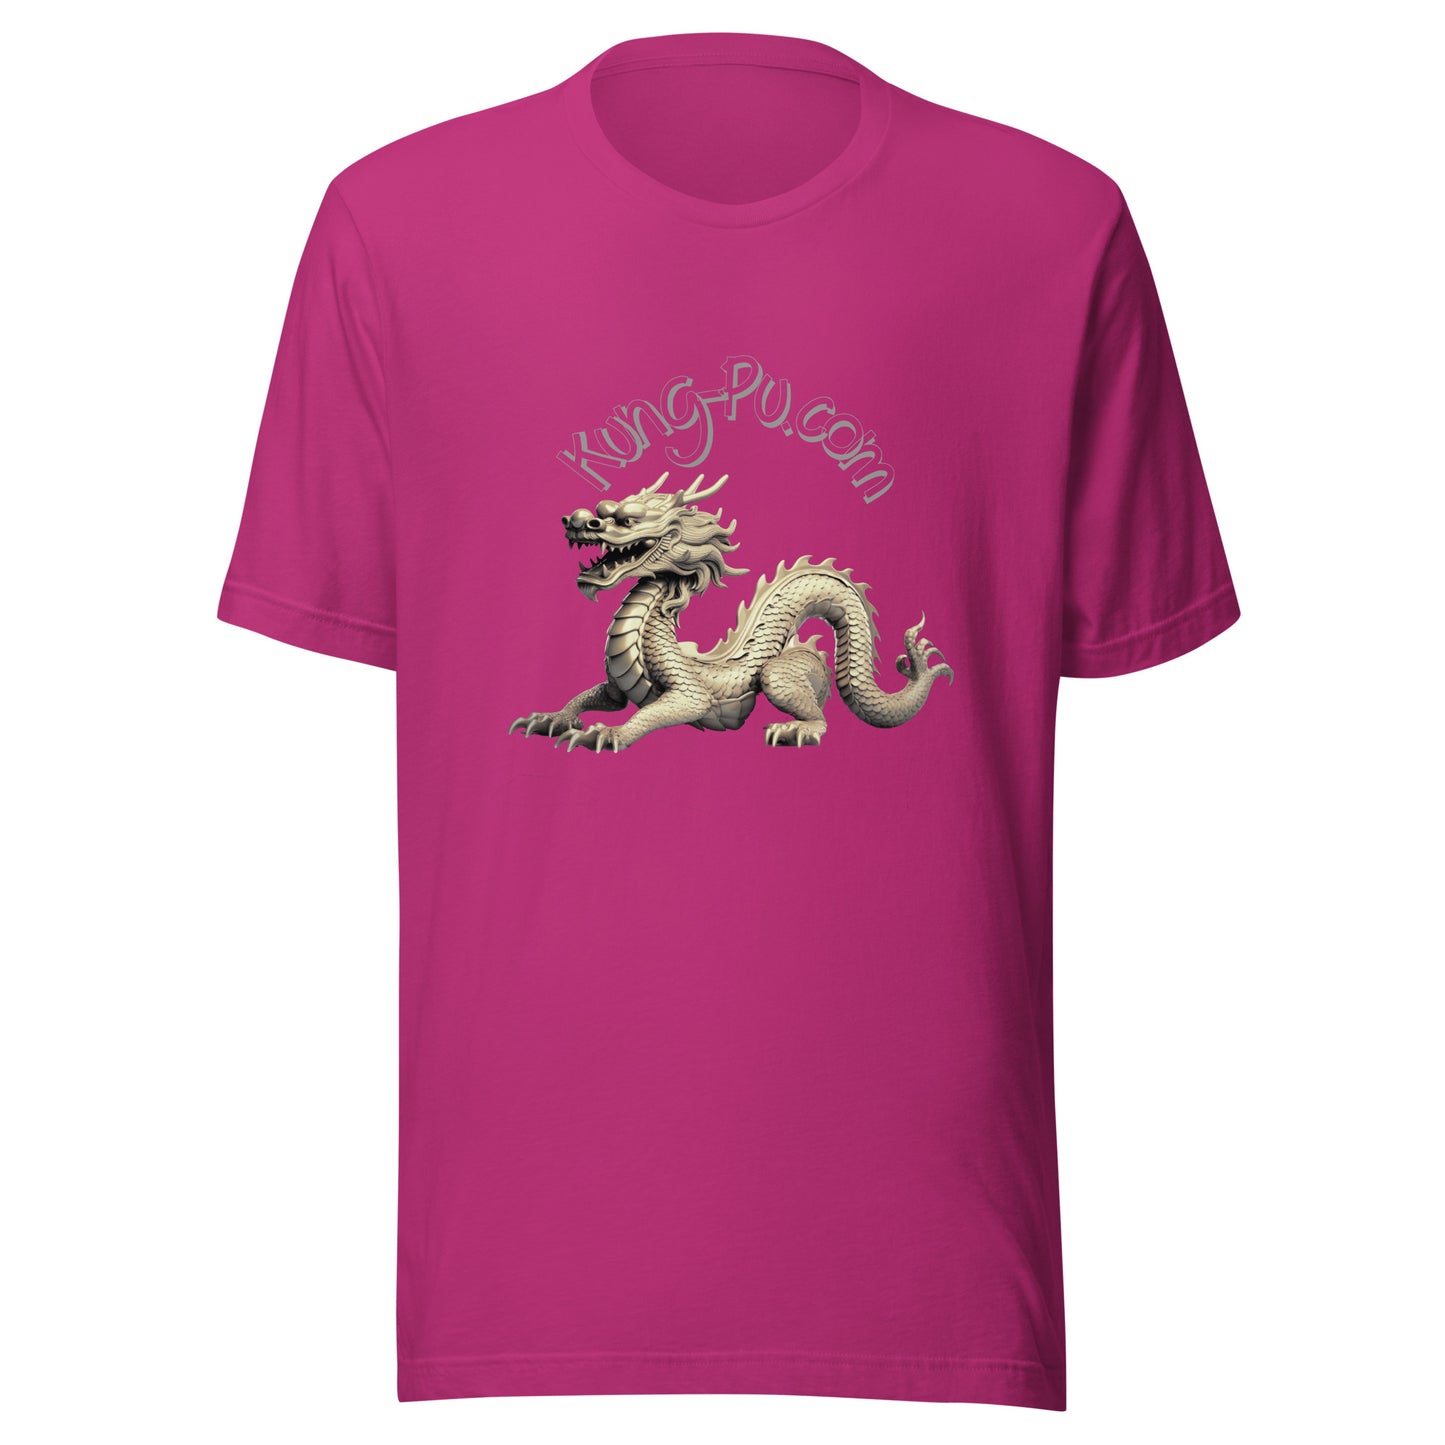 Pu - Kung-Pu Dragon T-Shirt